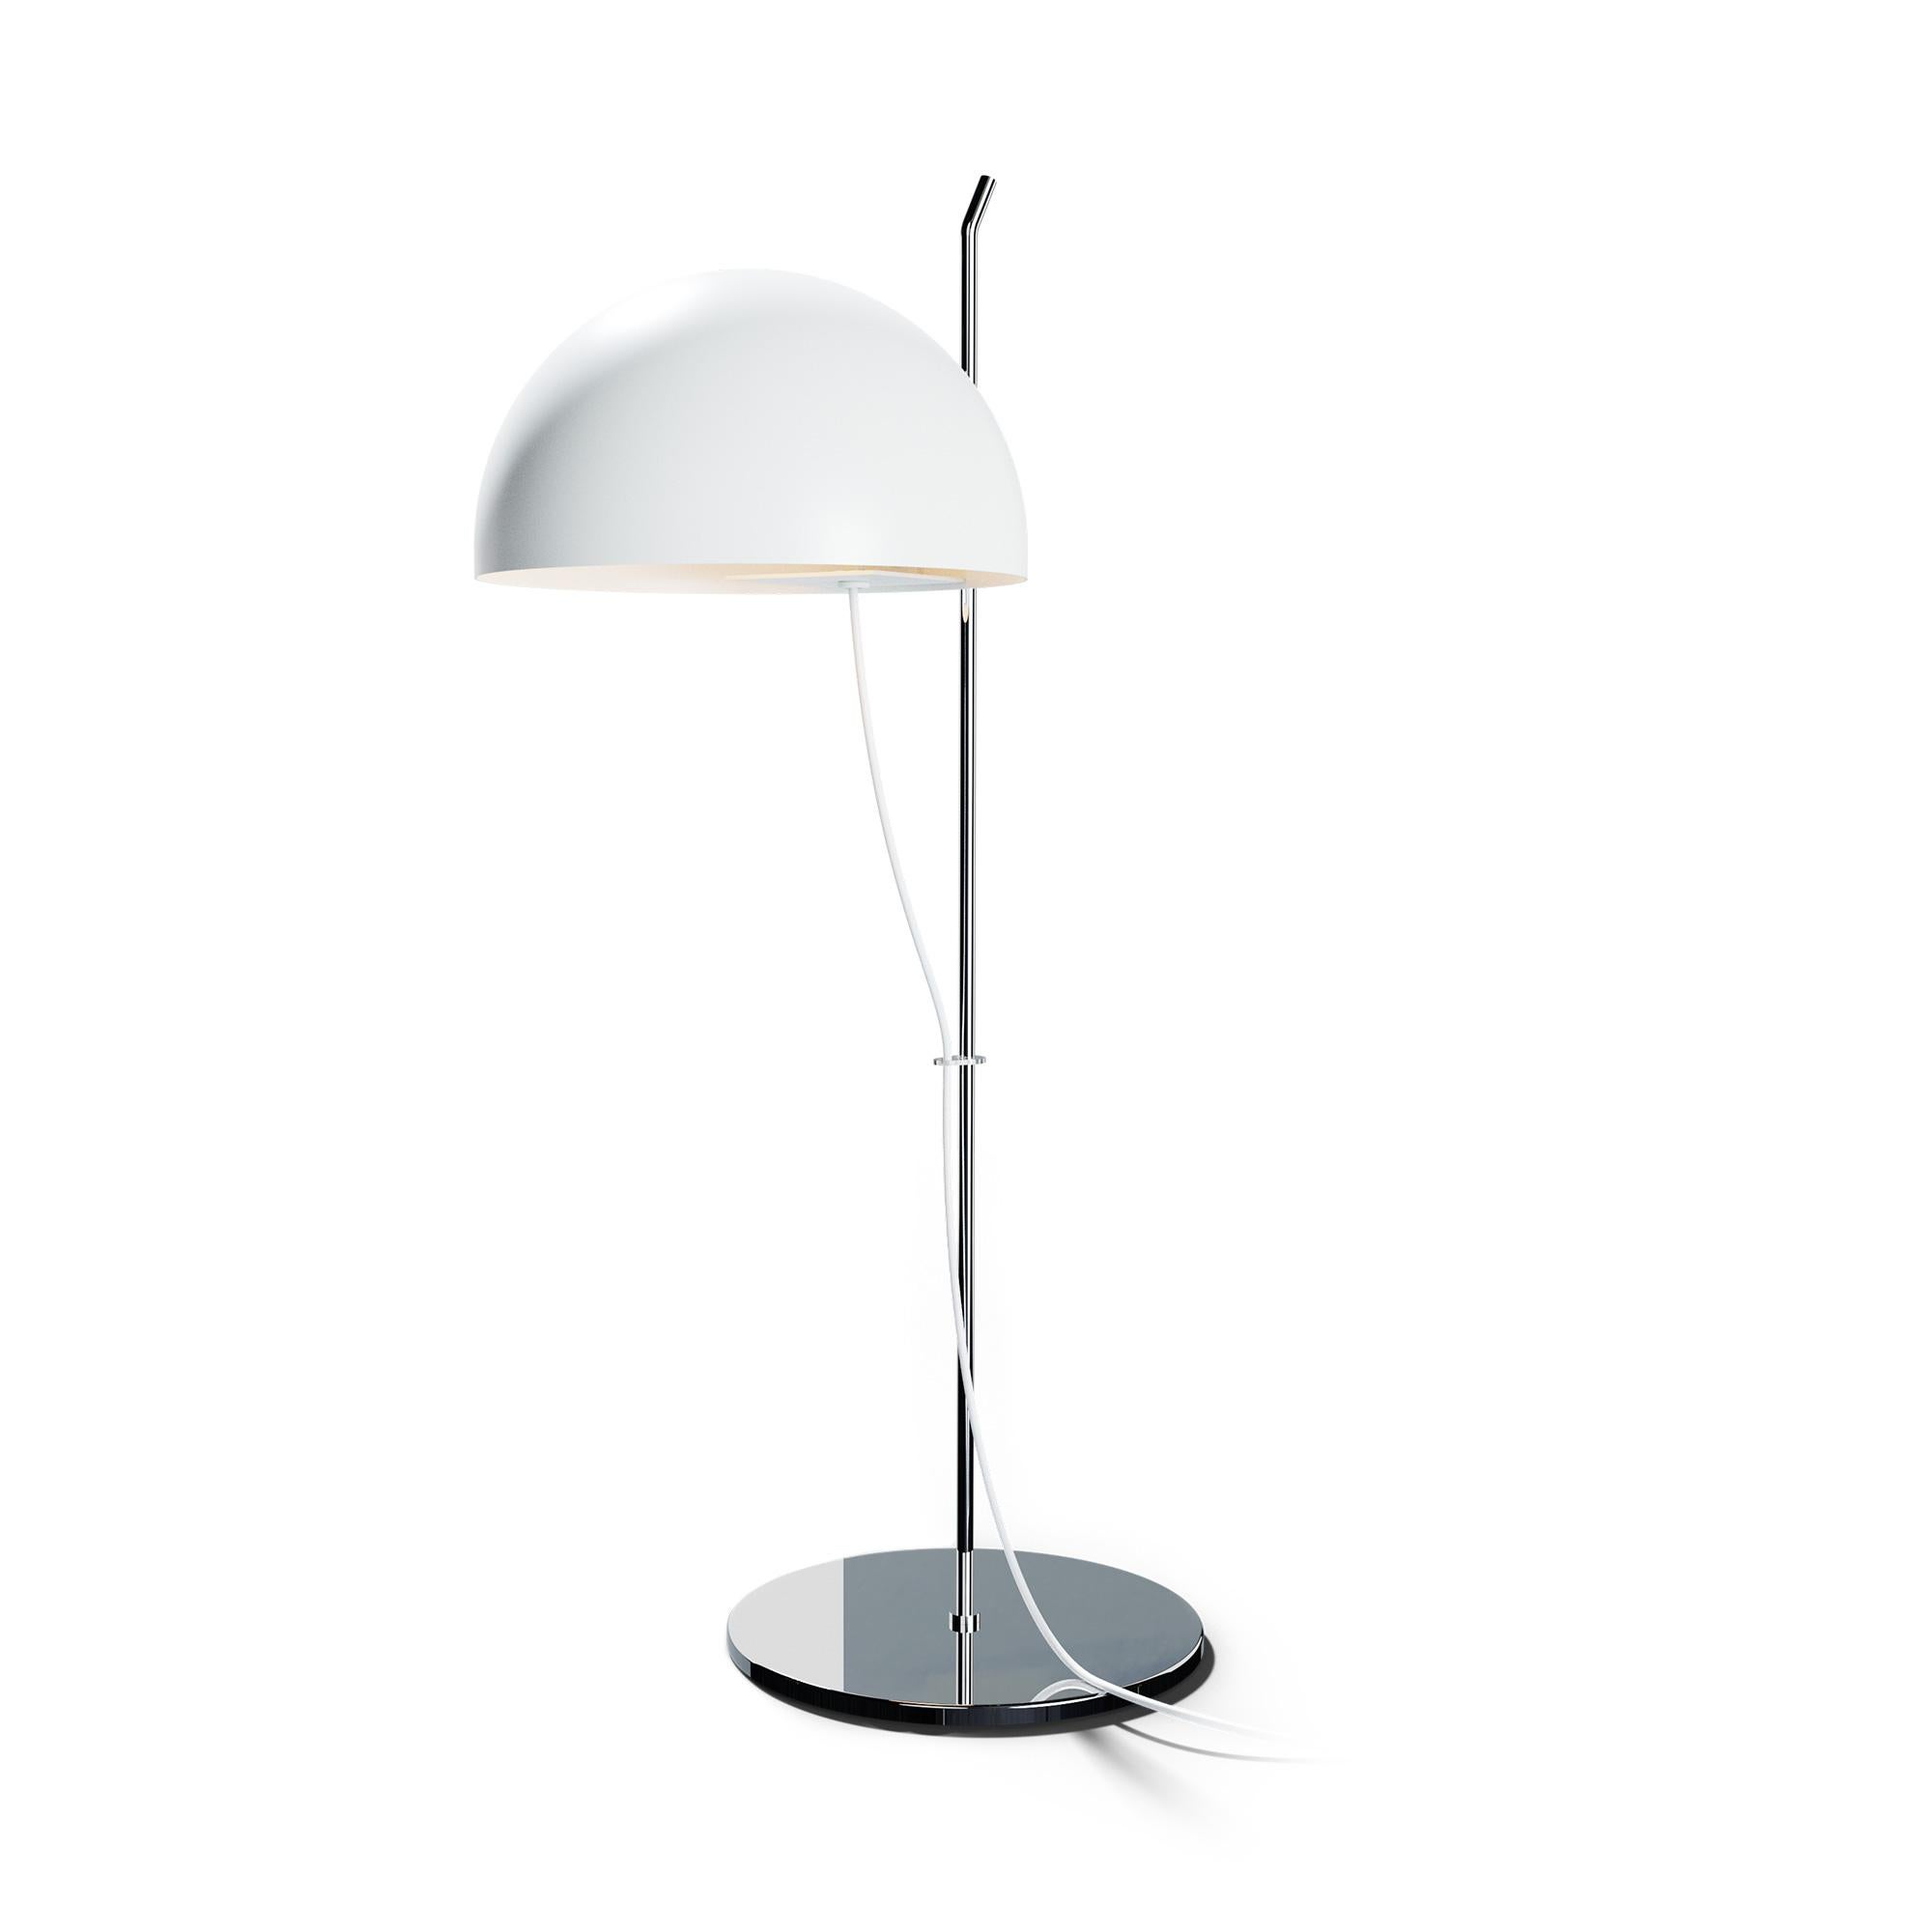 Lacquered Alain Richard 'A21' Desk Lamp in White for Disderot For Sale